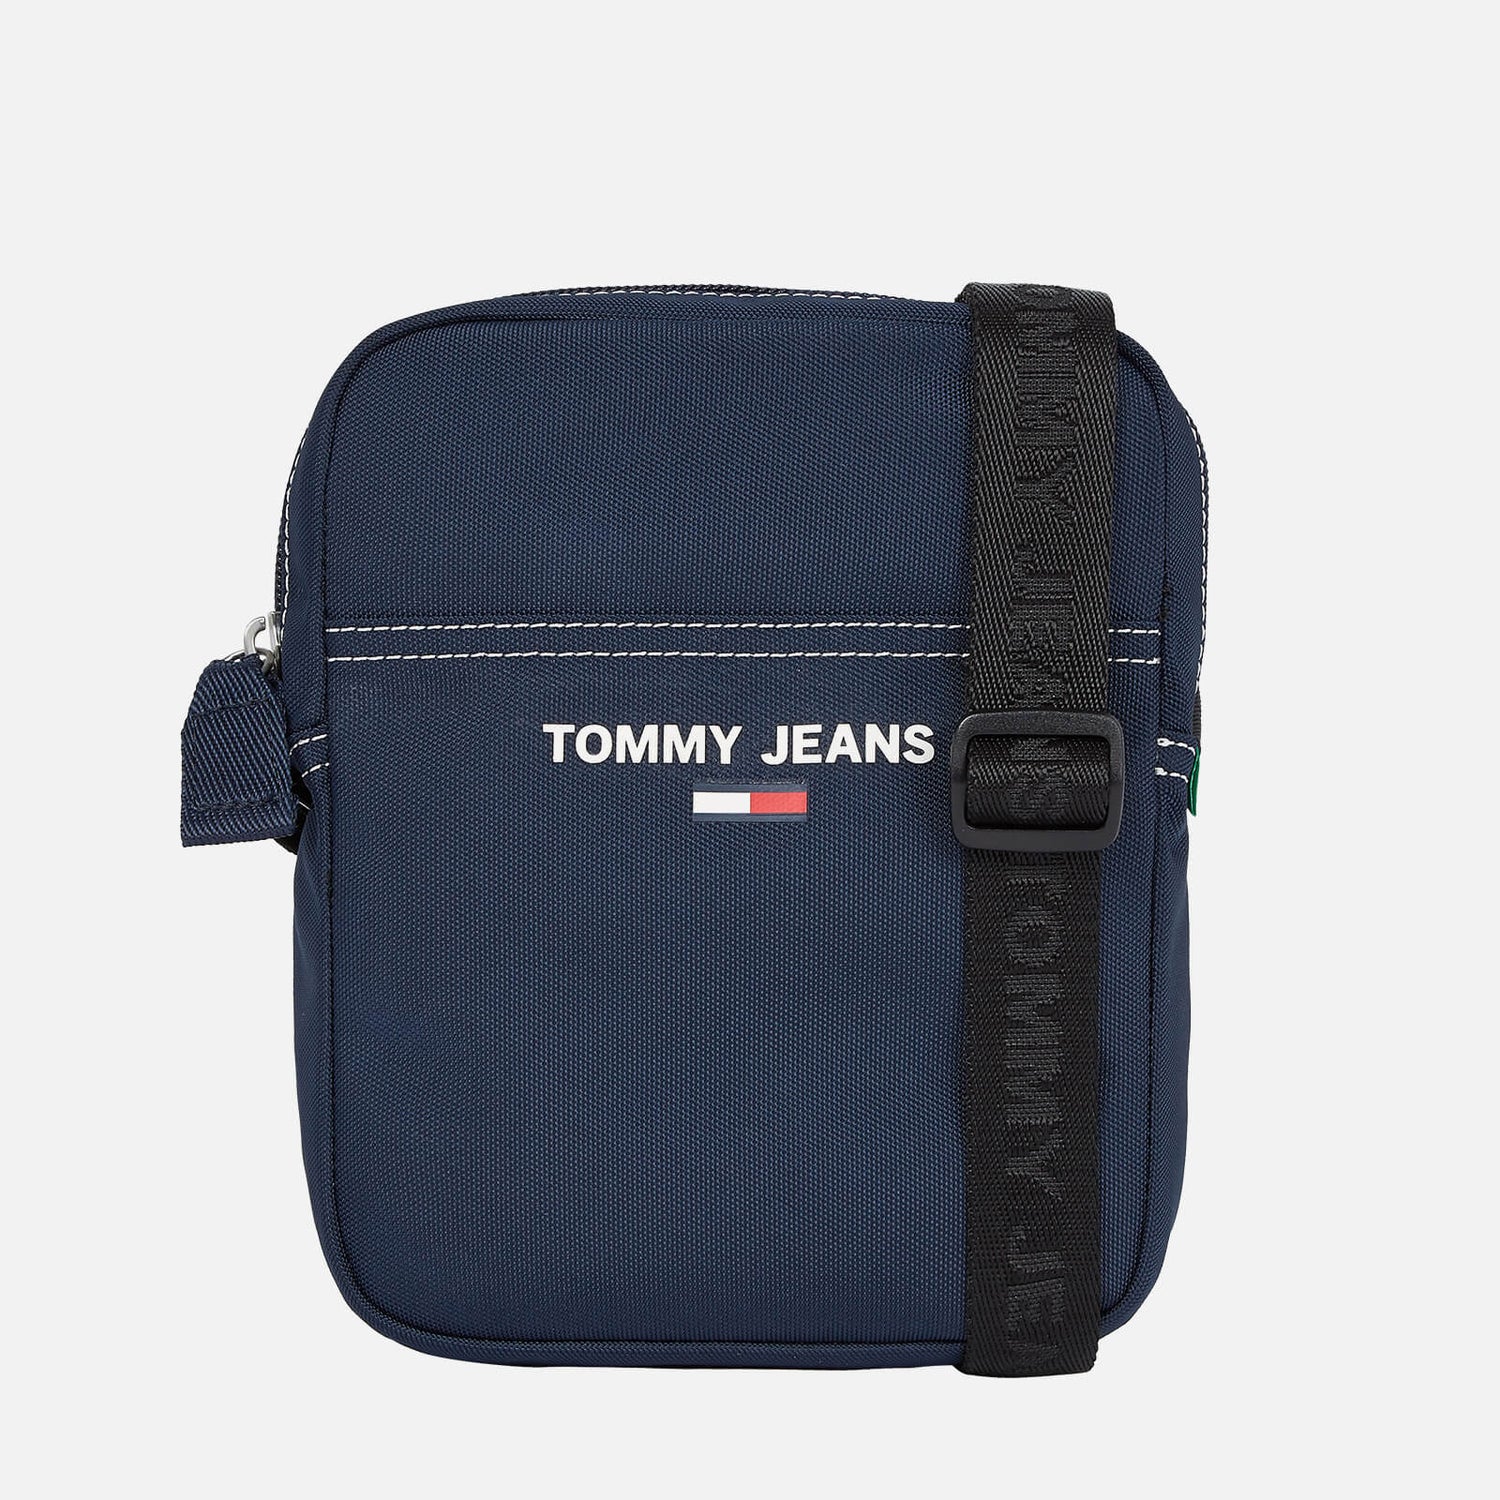 Tommy Jeans Men's Essential Reporter Bag - Twilight Navy